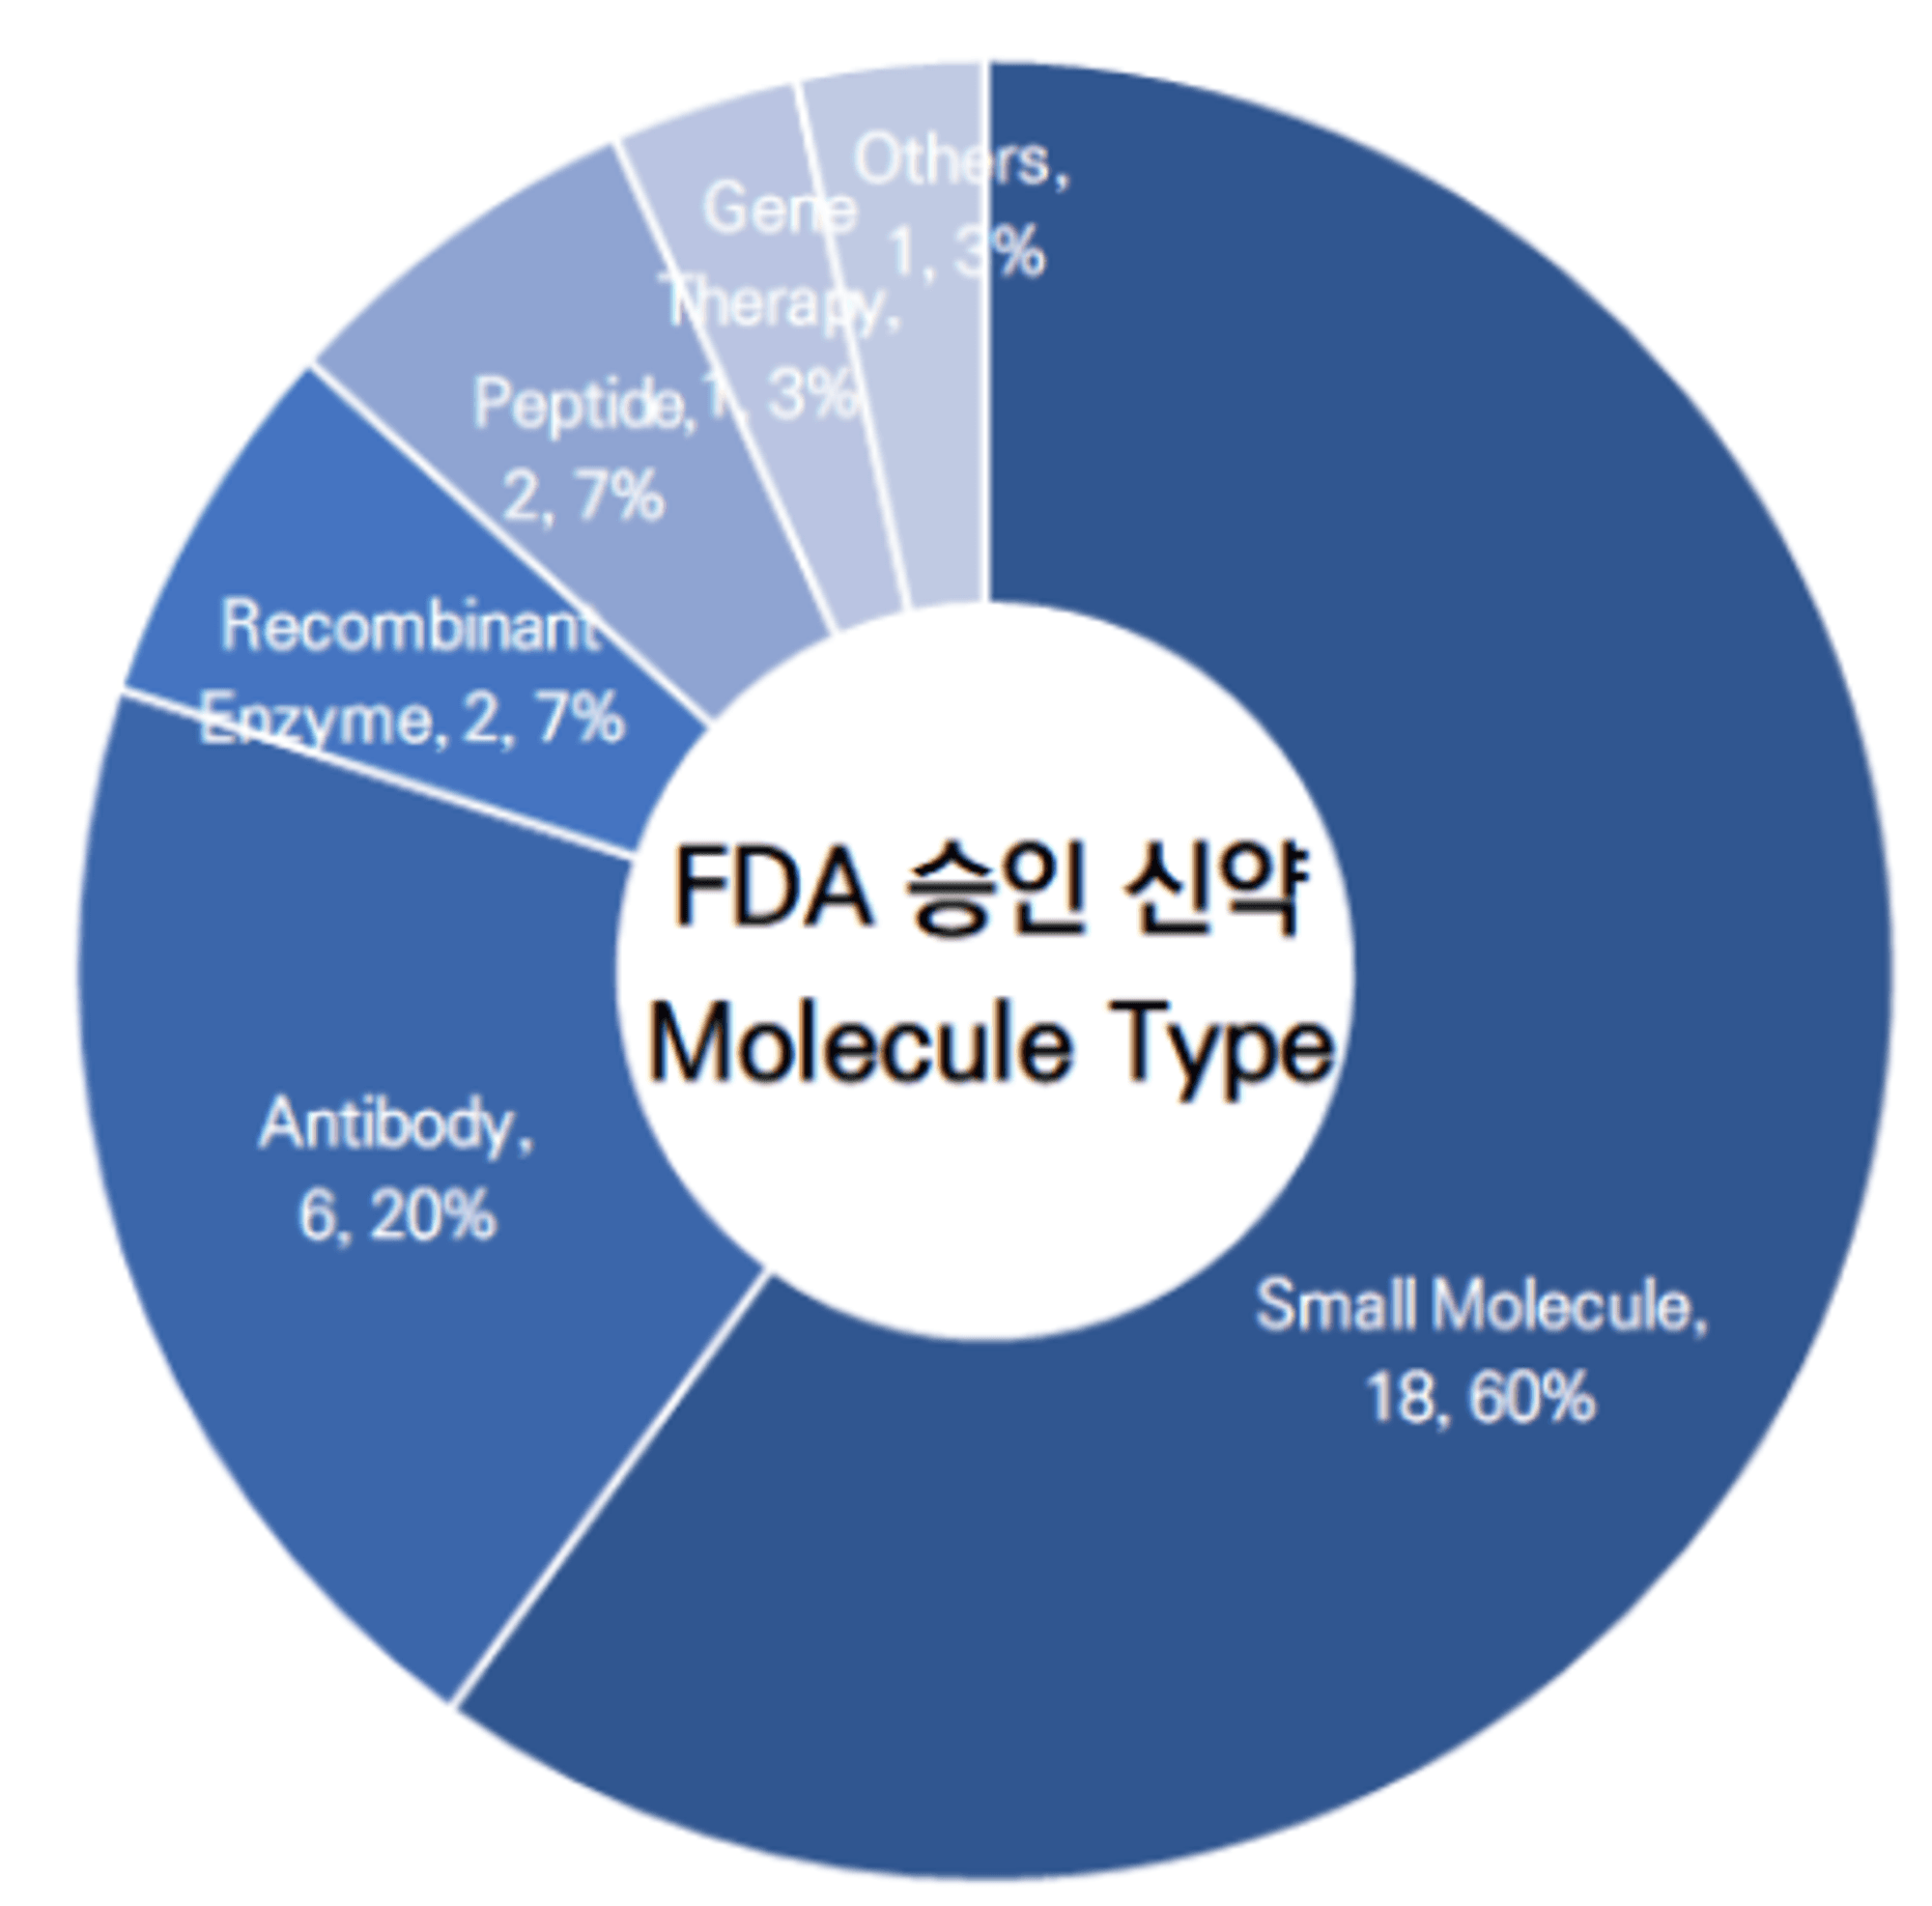 fda-approved-molecule-type